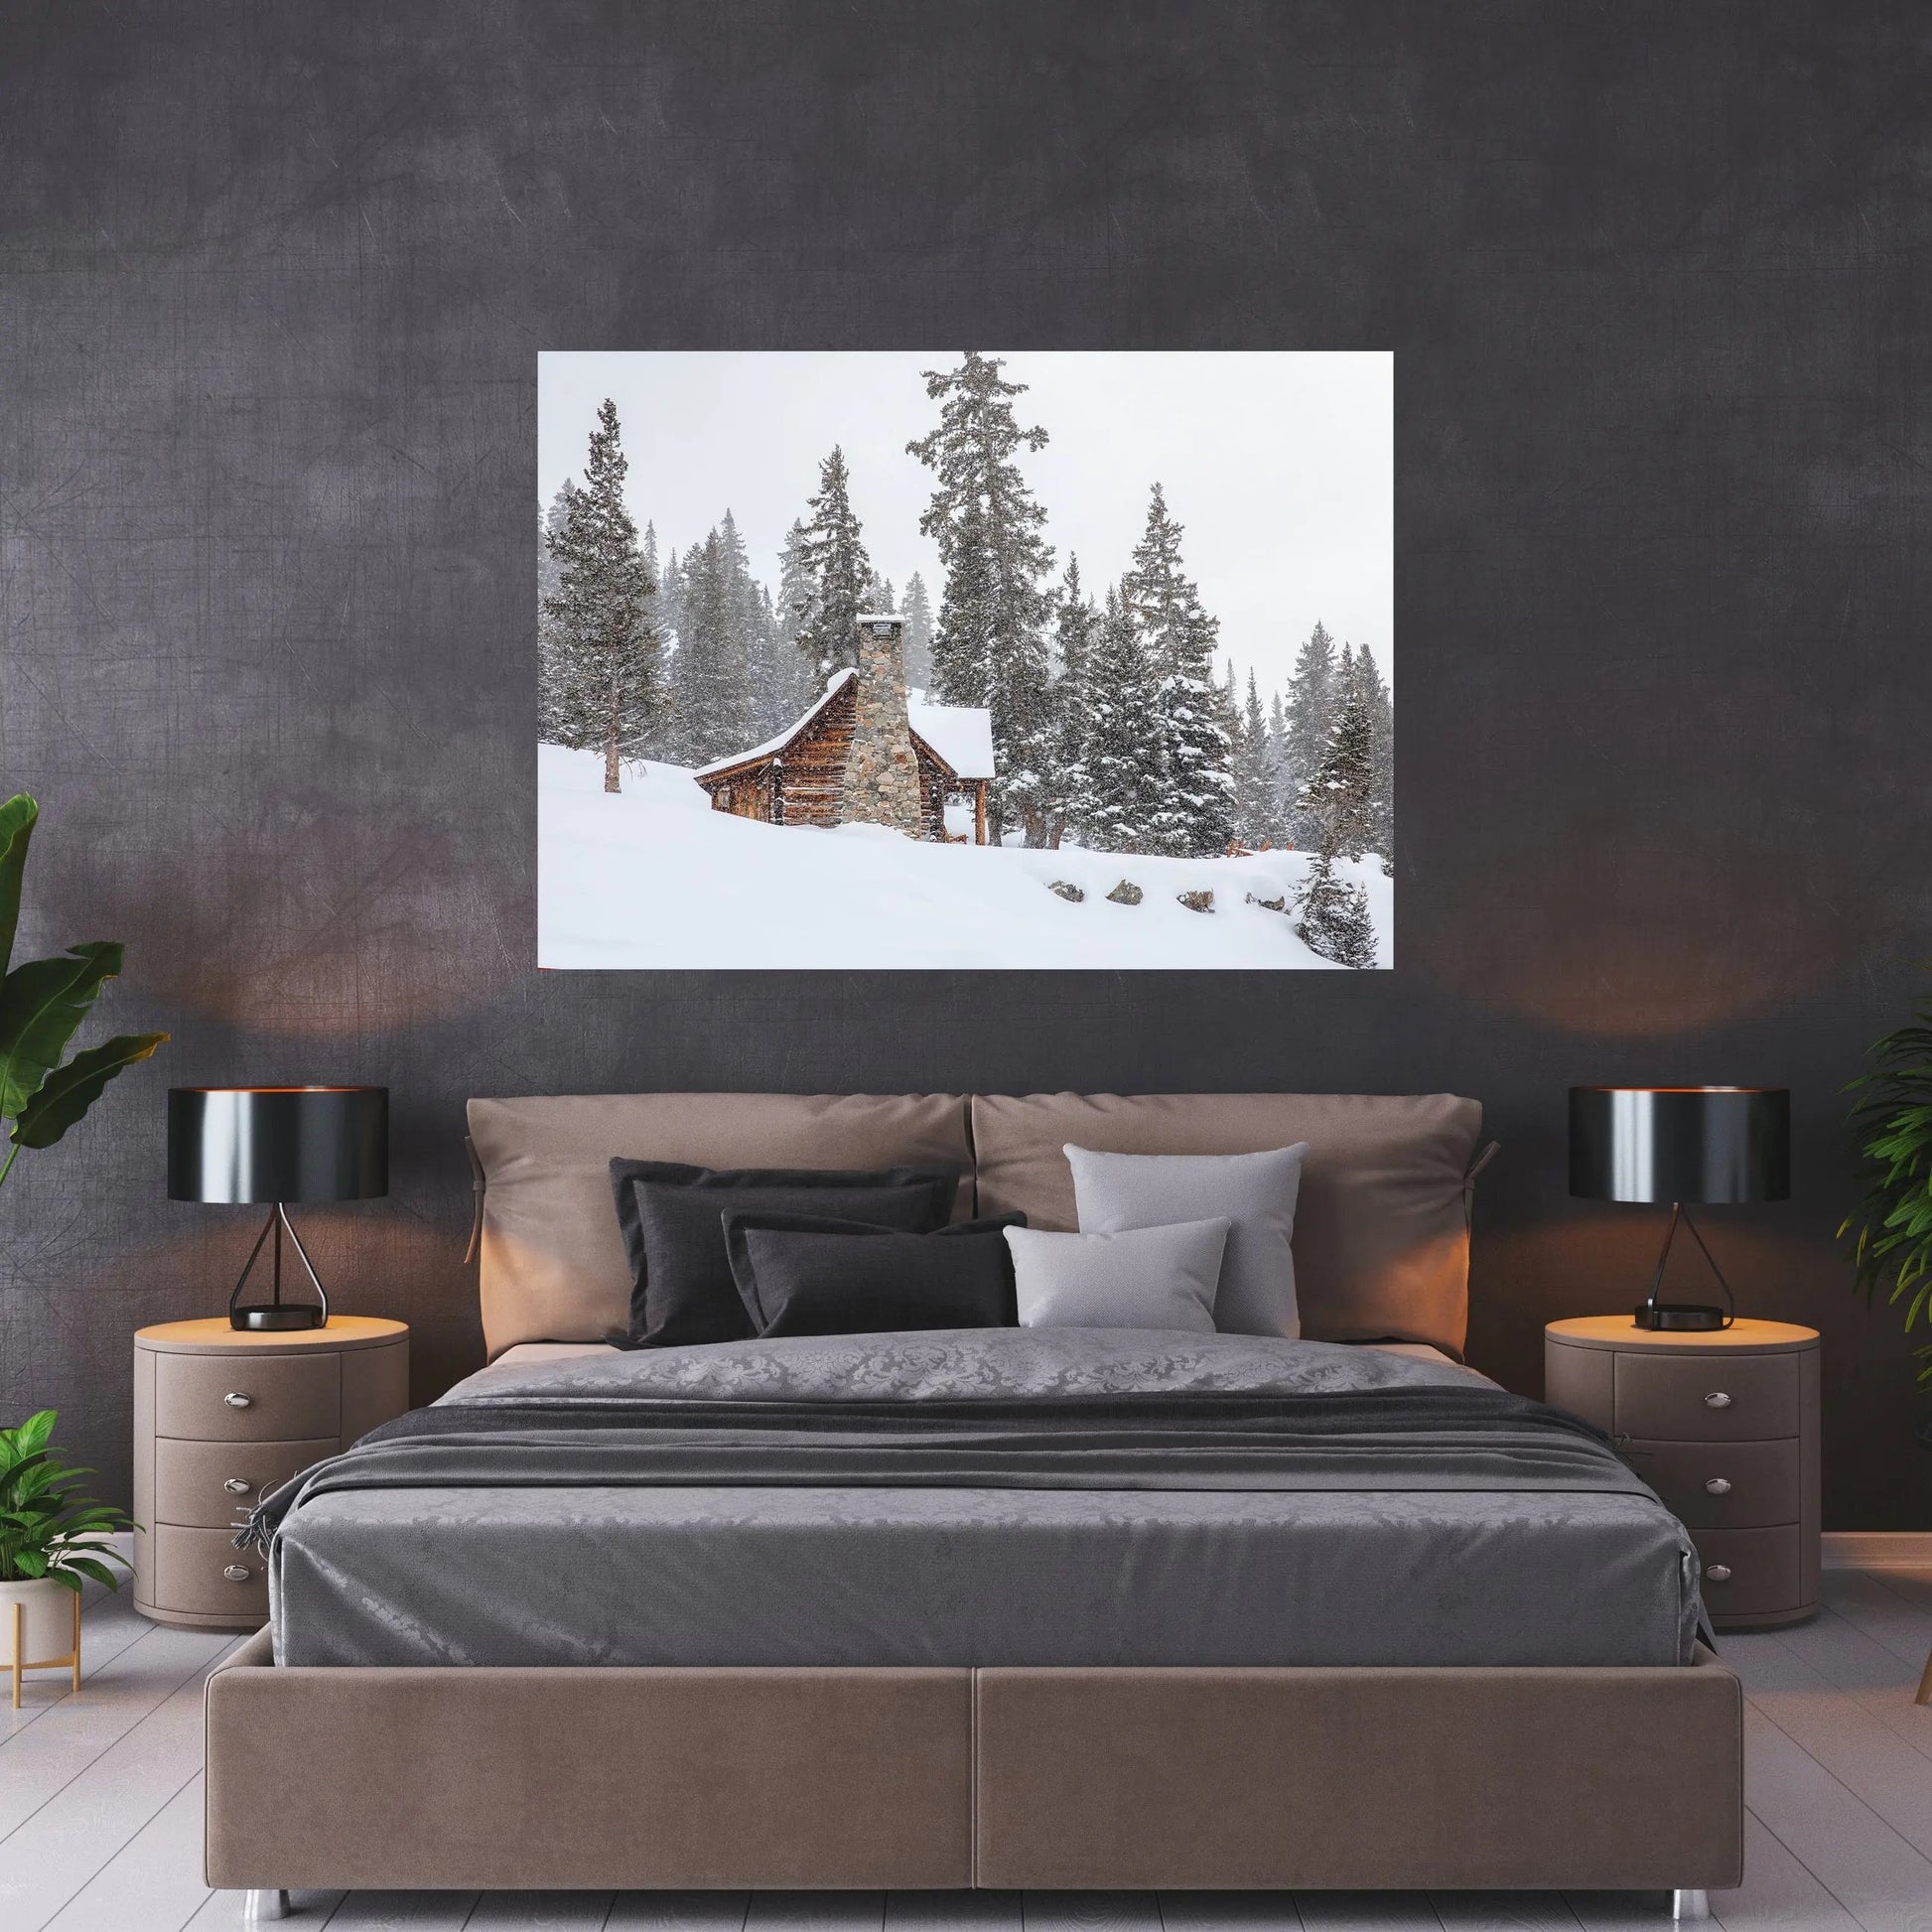 snow covered rustic cabin art on luxury dark wall